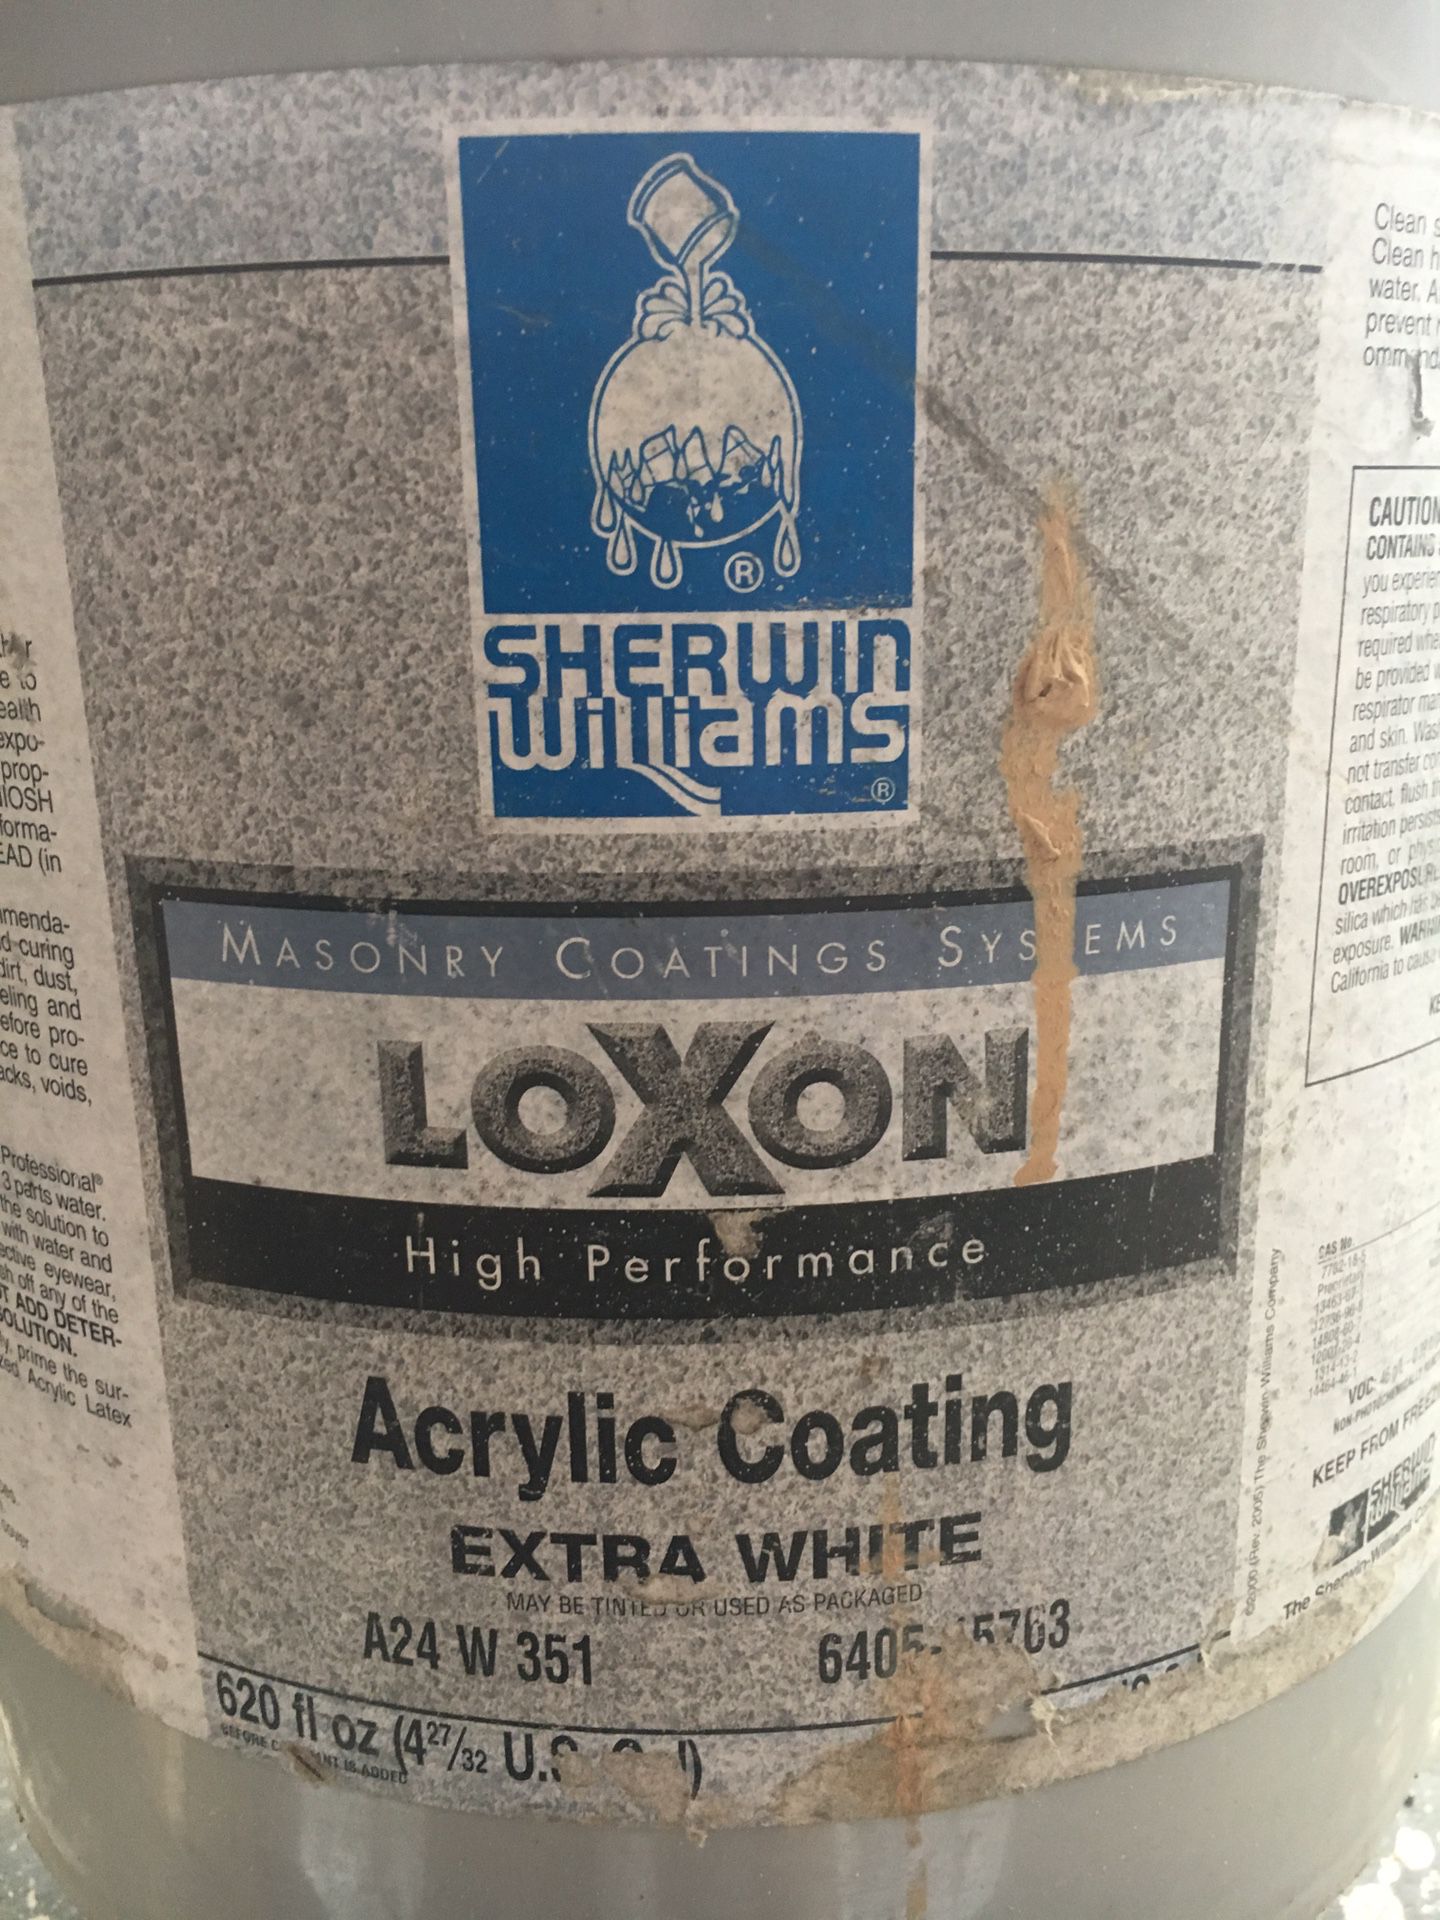 5 Gallon - Sherwin Williams Loxon Acrylic Coating Paint - Extra White